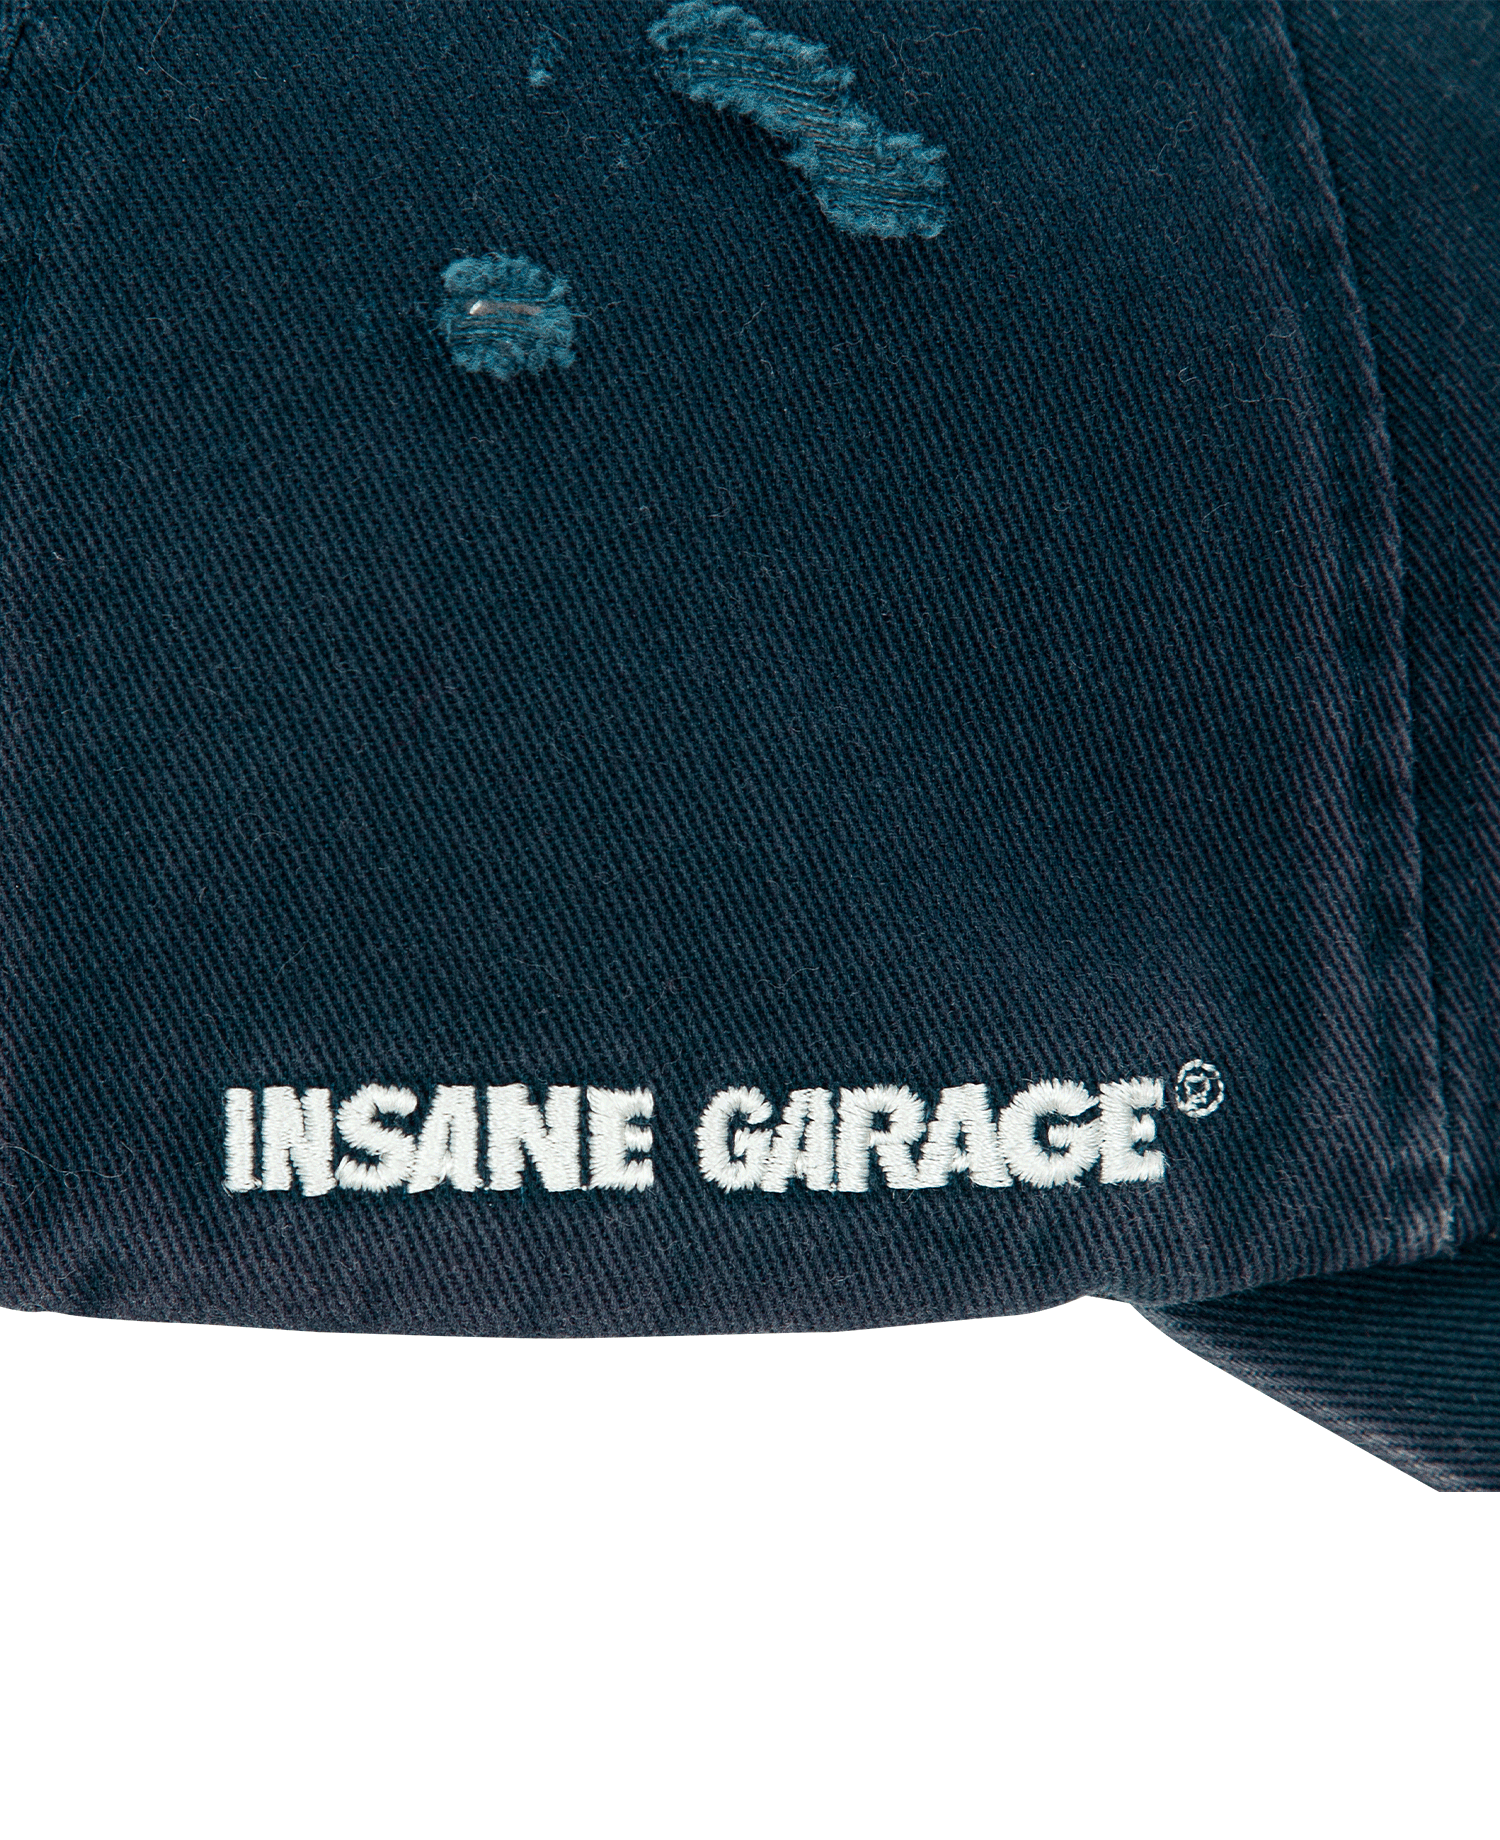 INSANE CROSS GRUNGE BALL CAP_NAVY